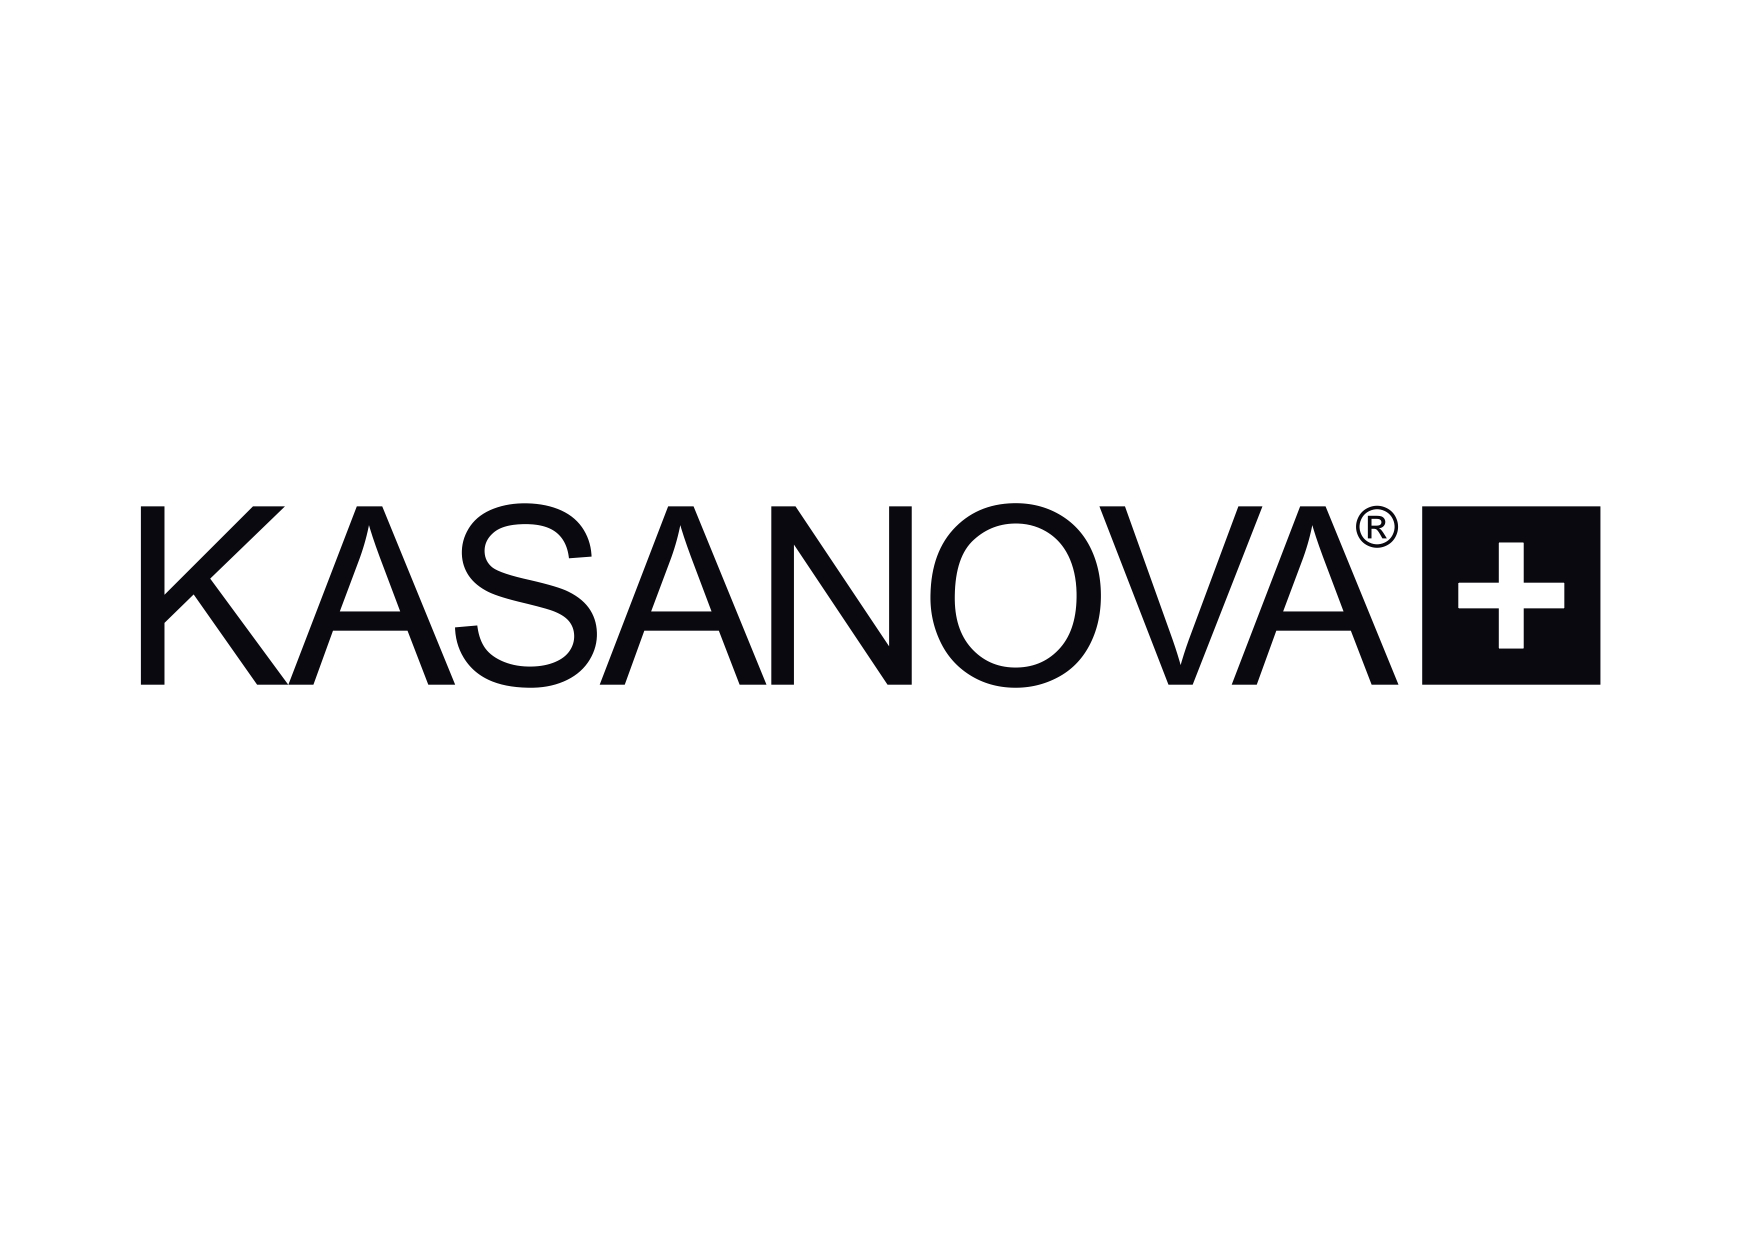 KASANOVA + LOGO_page-0001